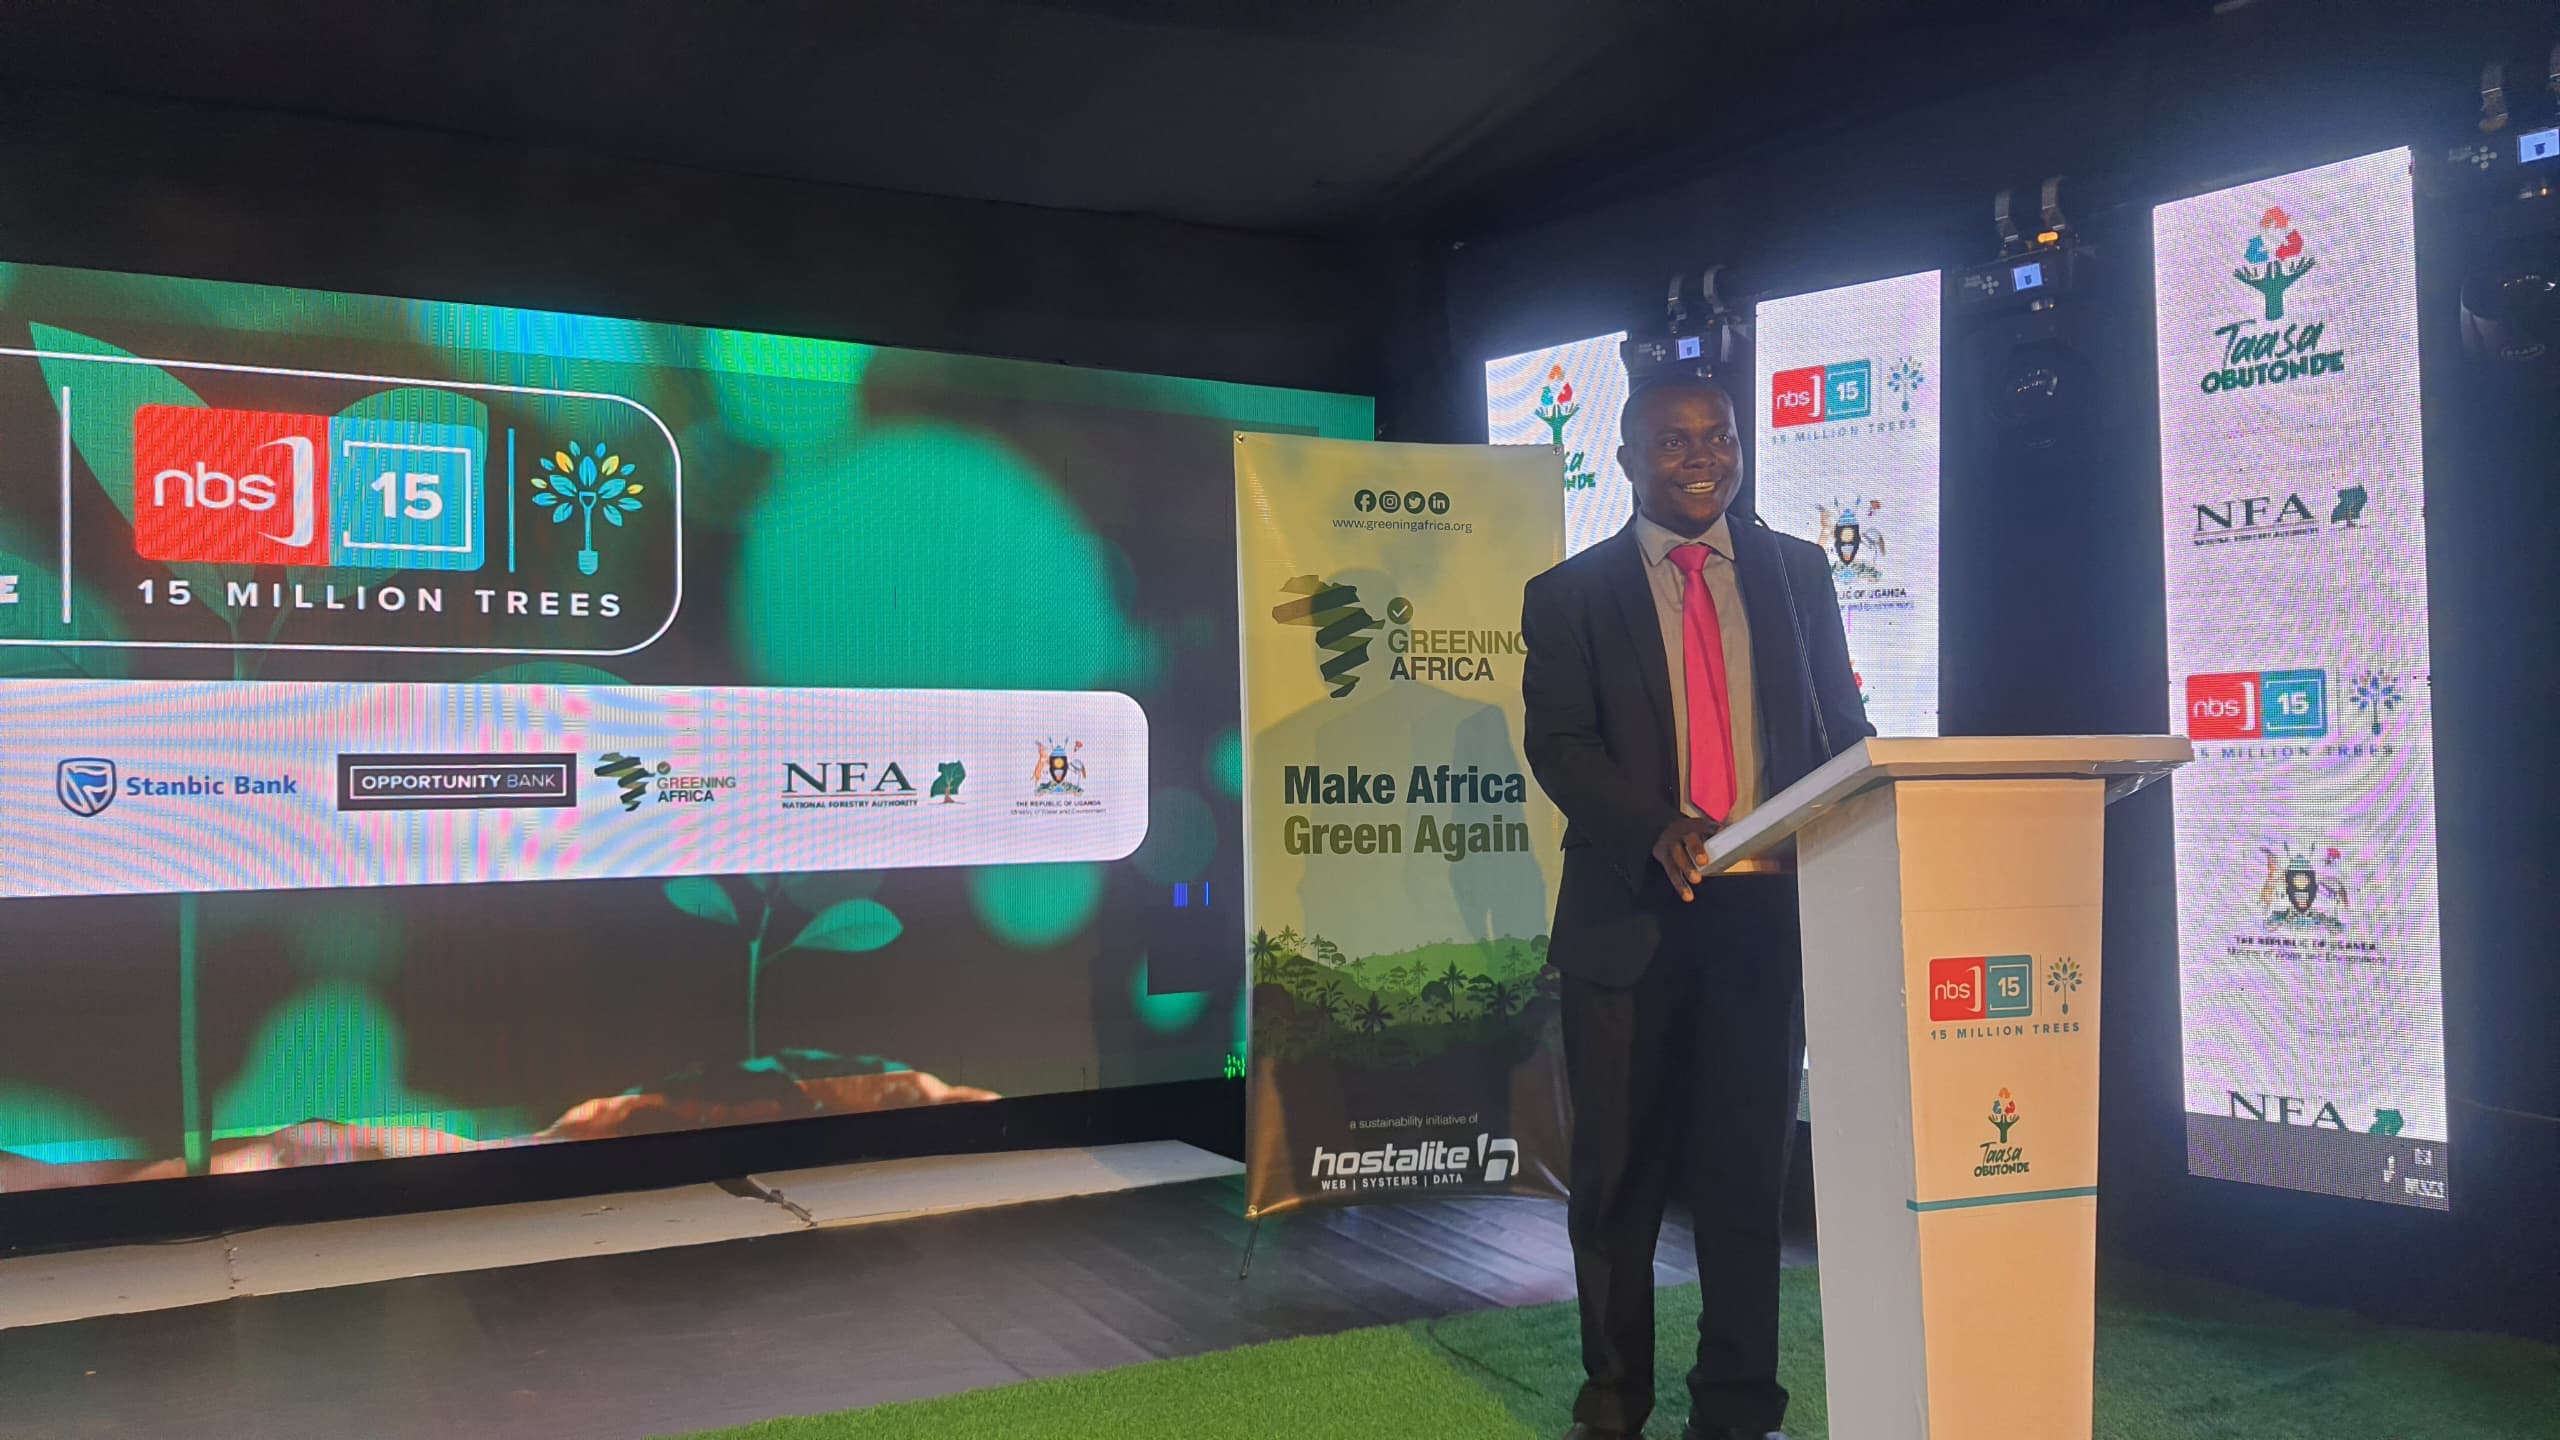 Greening Africa, NBS partner for the 15 Million Trees